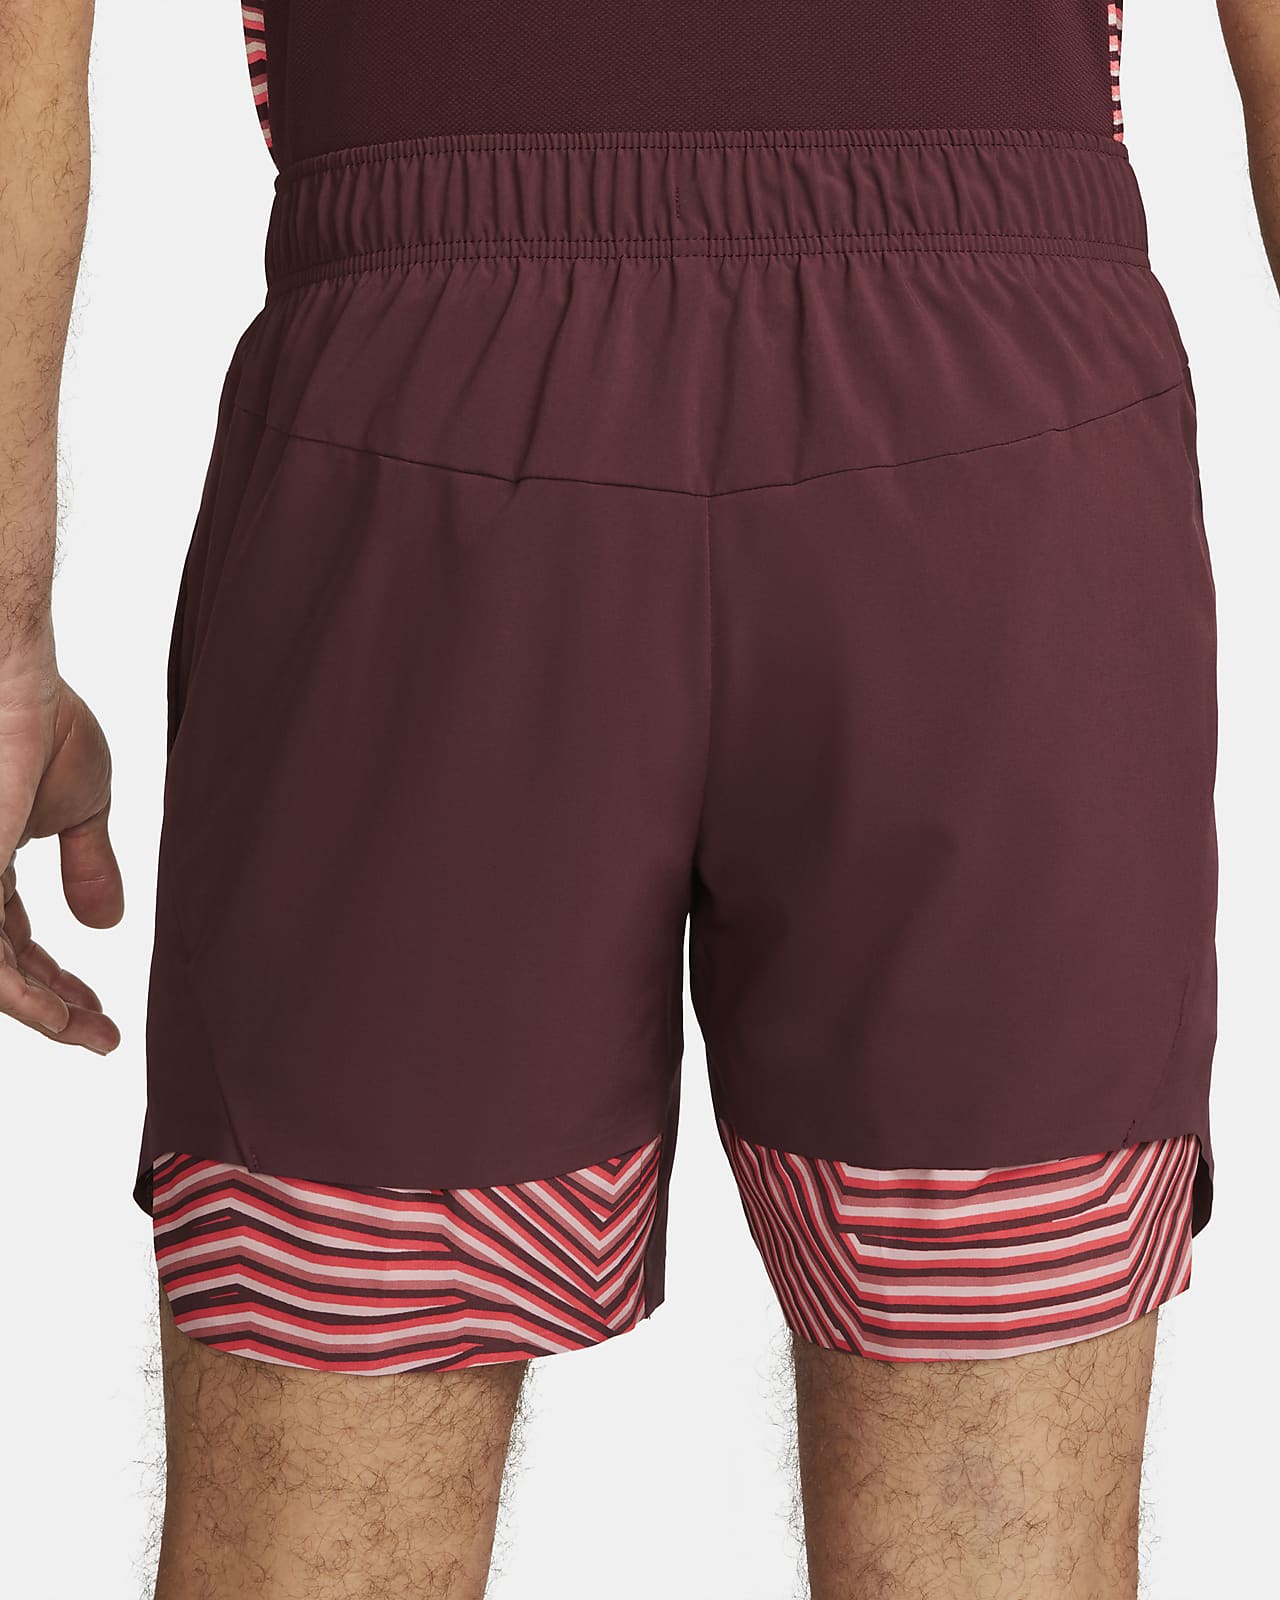 Nike Court Flex Zip Off Tennis Pants Grey & Black 887524 101 Men's Size  Large